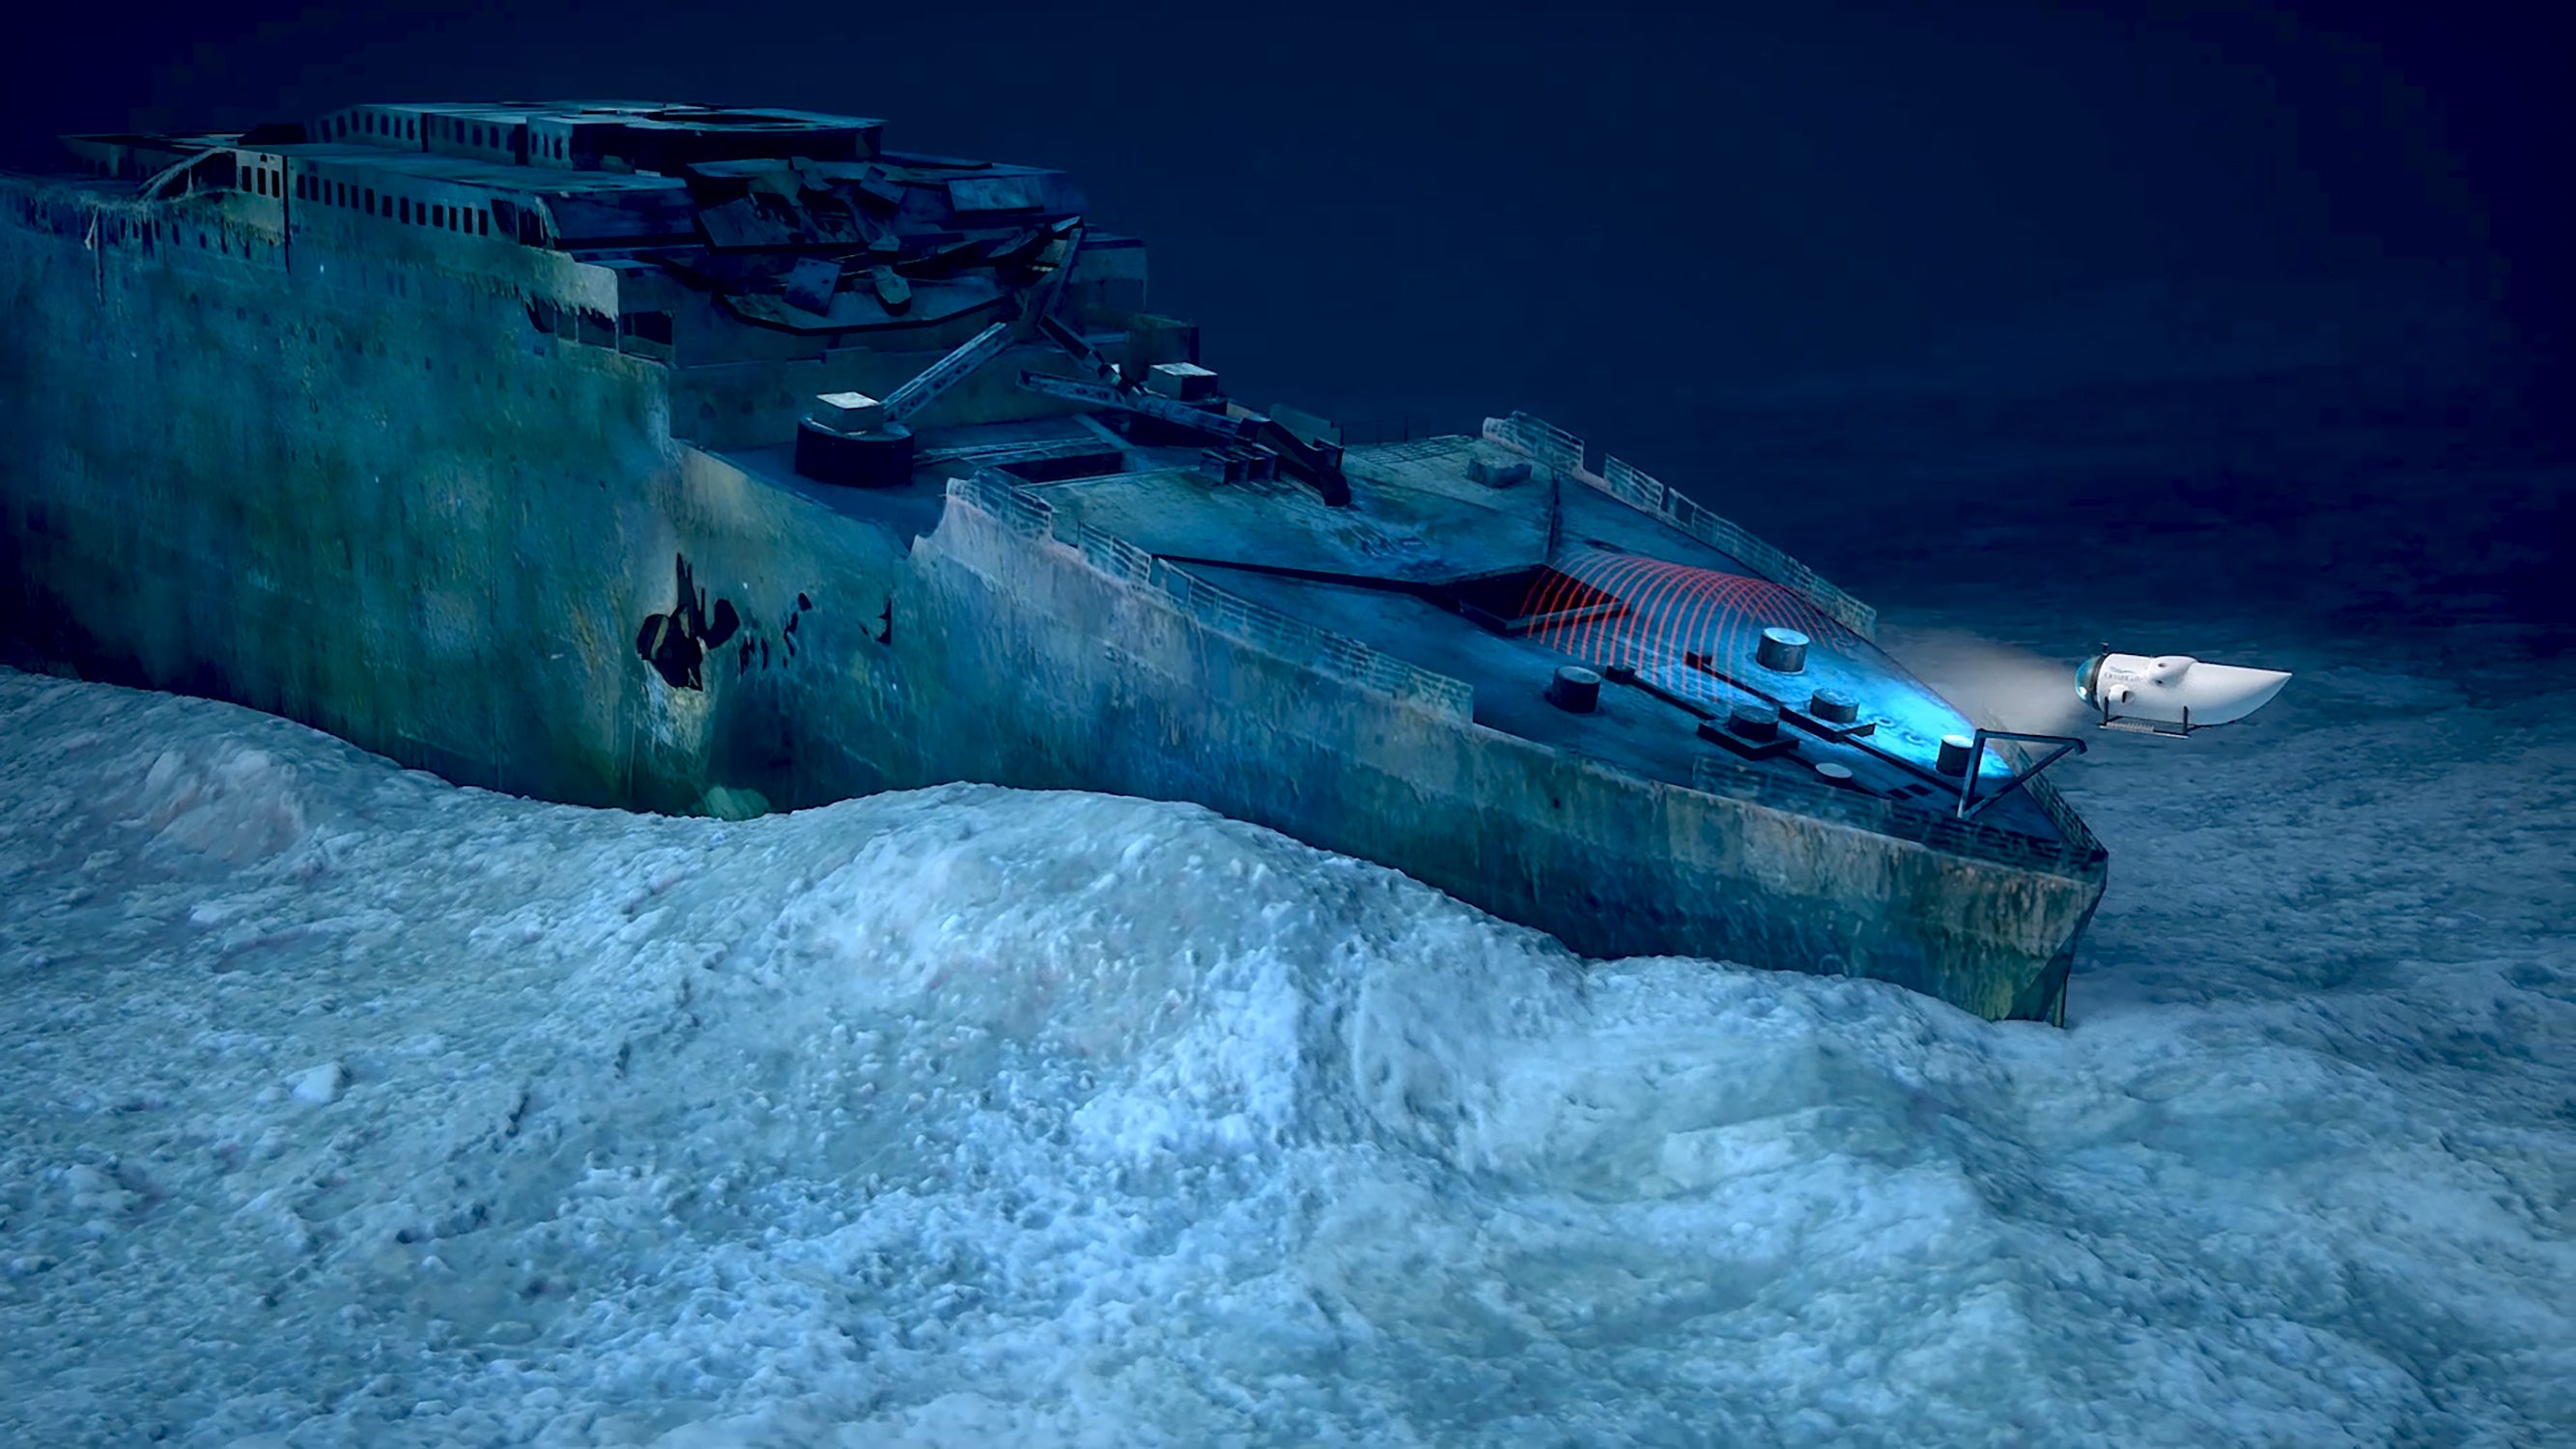 Submarine visiting the Titanic